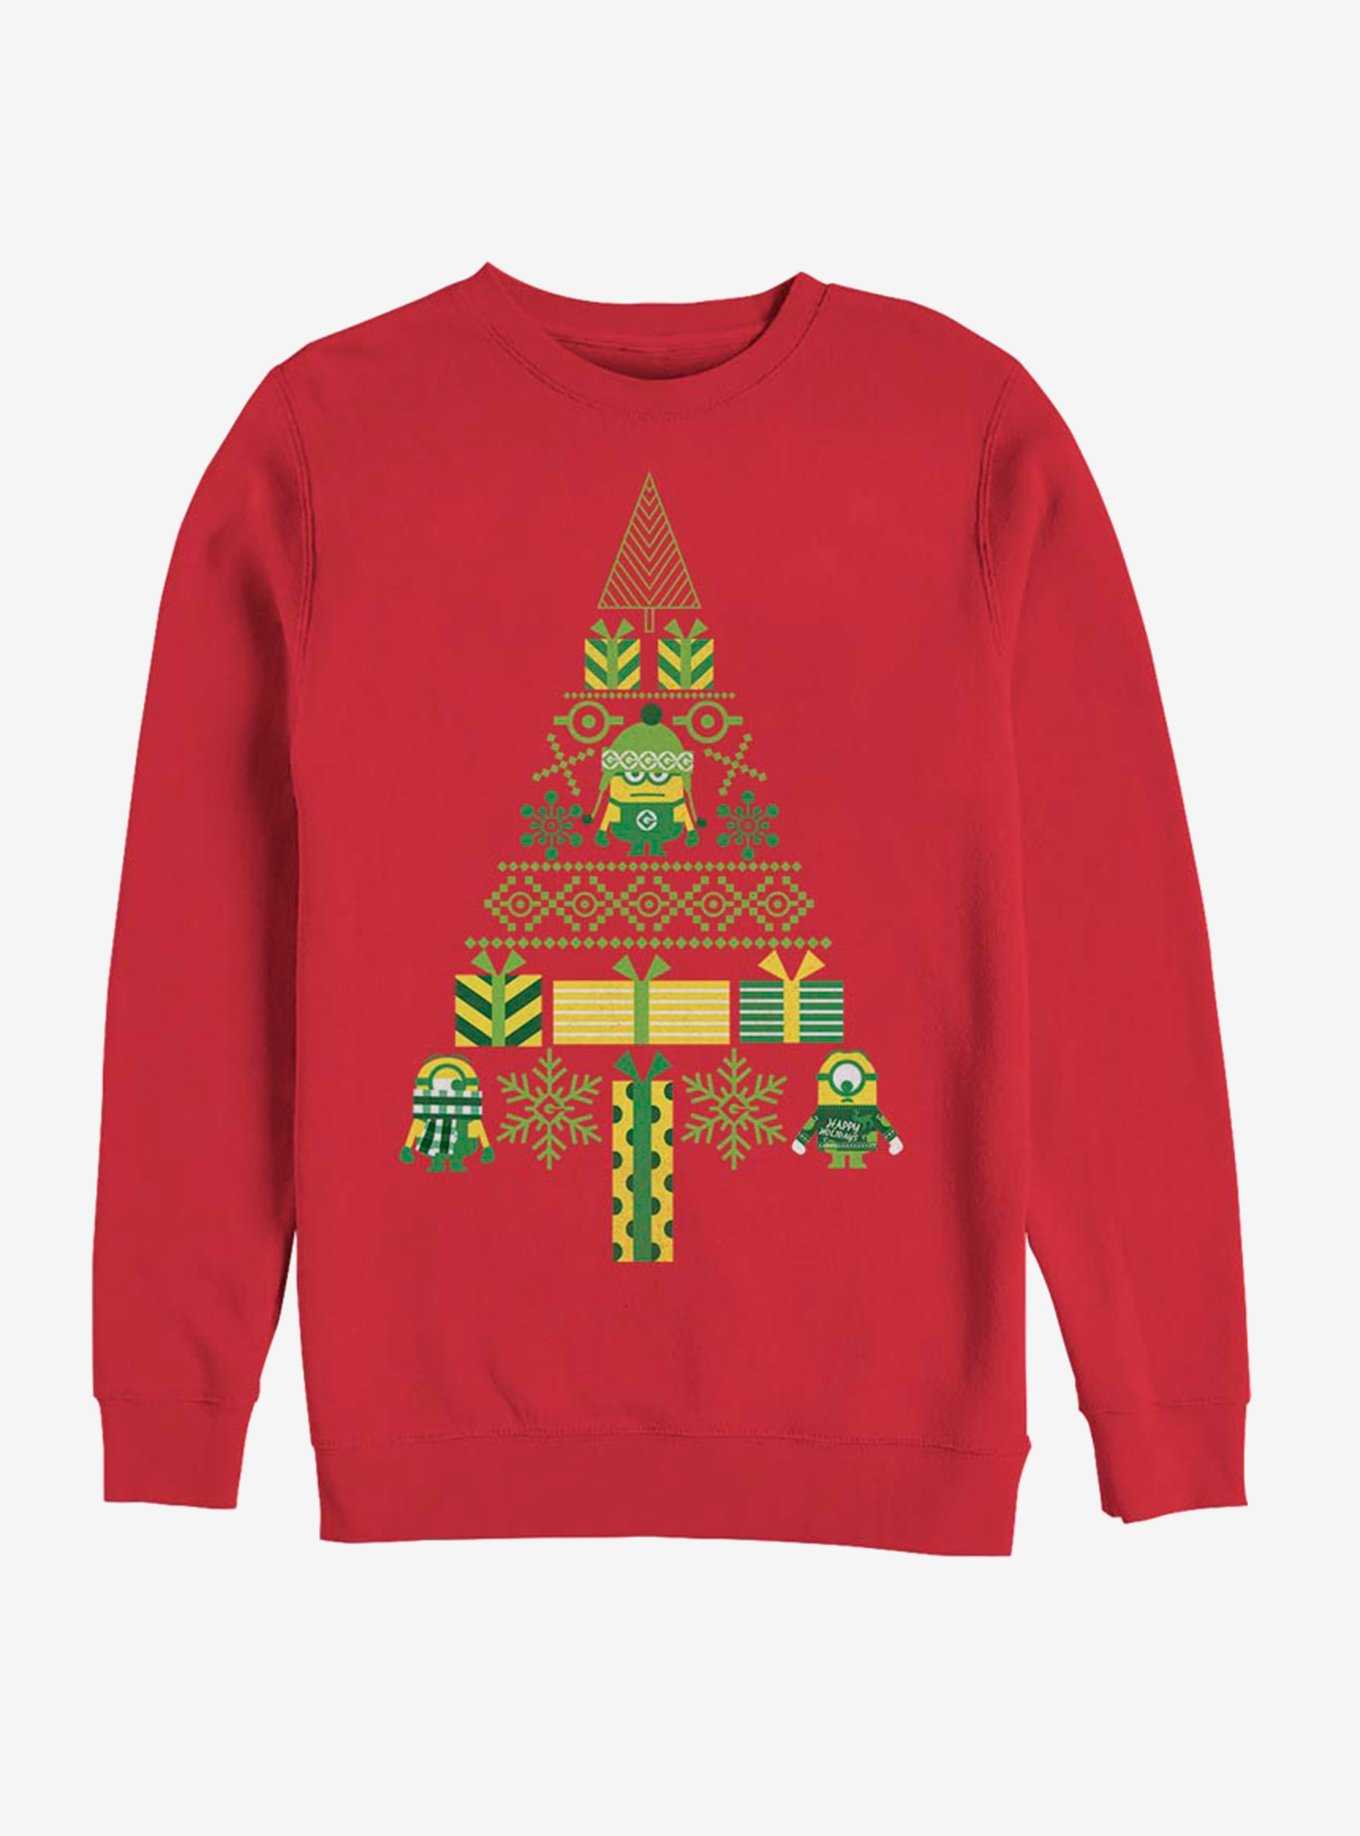 Minions Christmas Tree Crew Sweatshirt, , hi-res